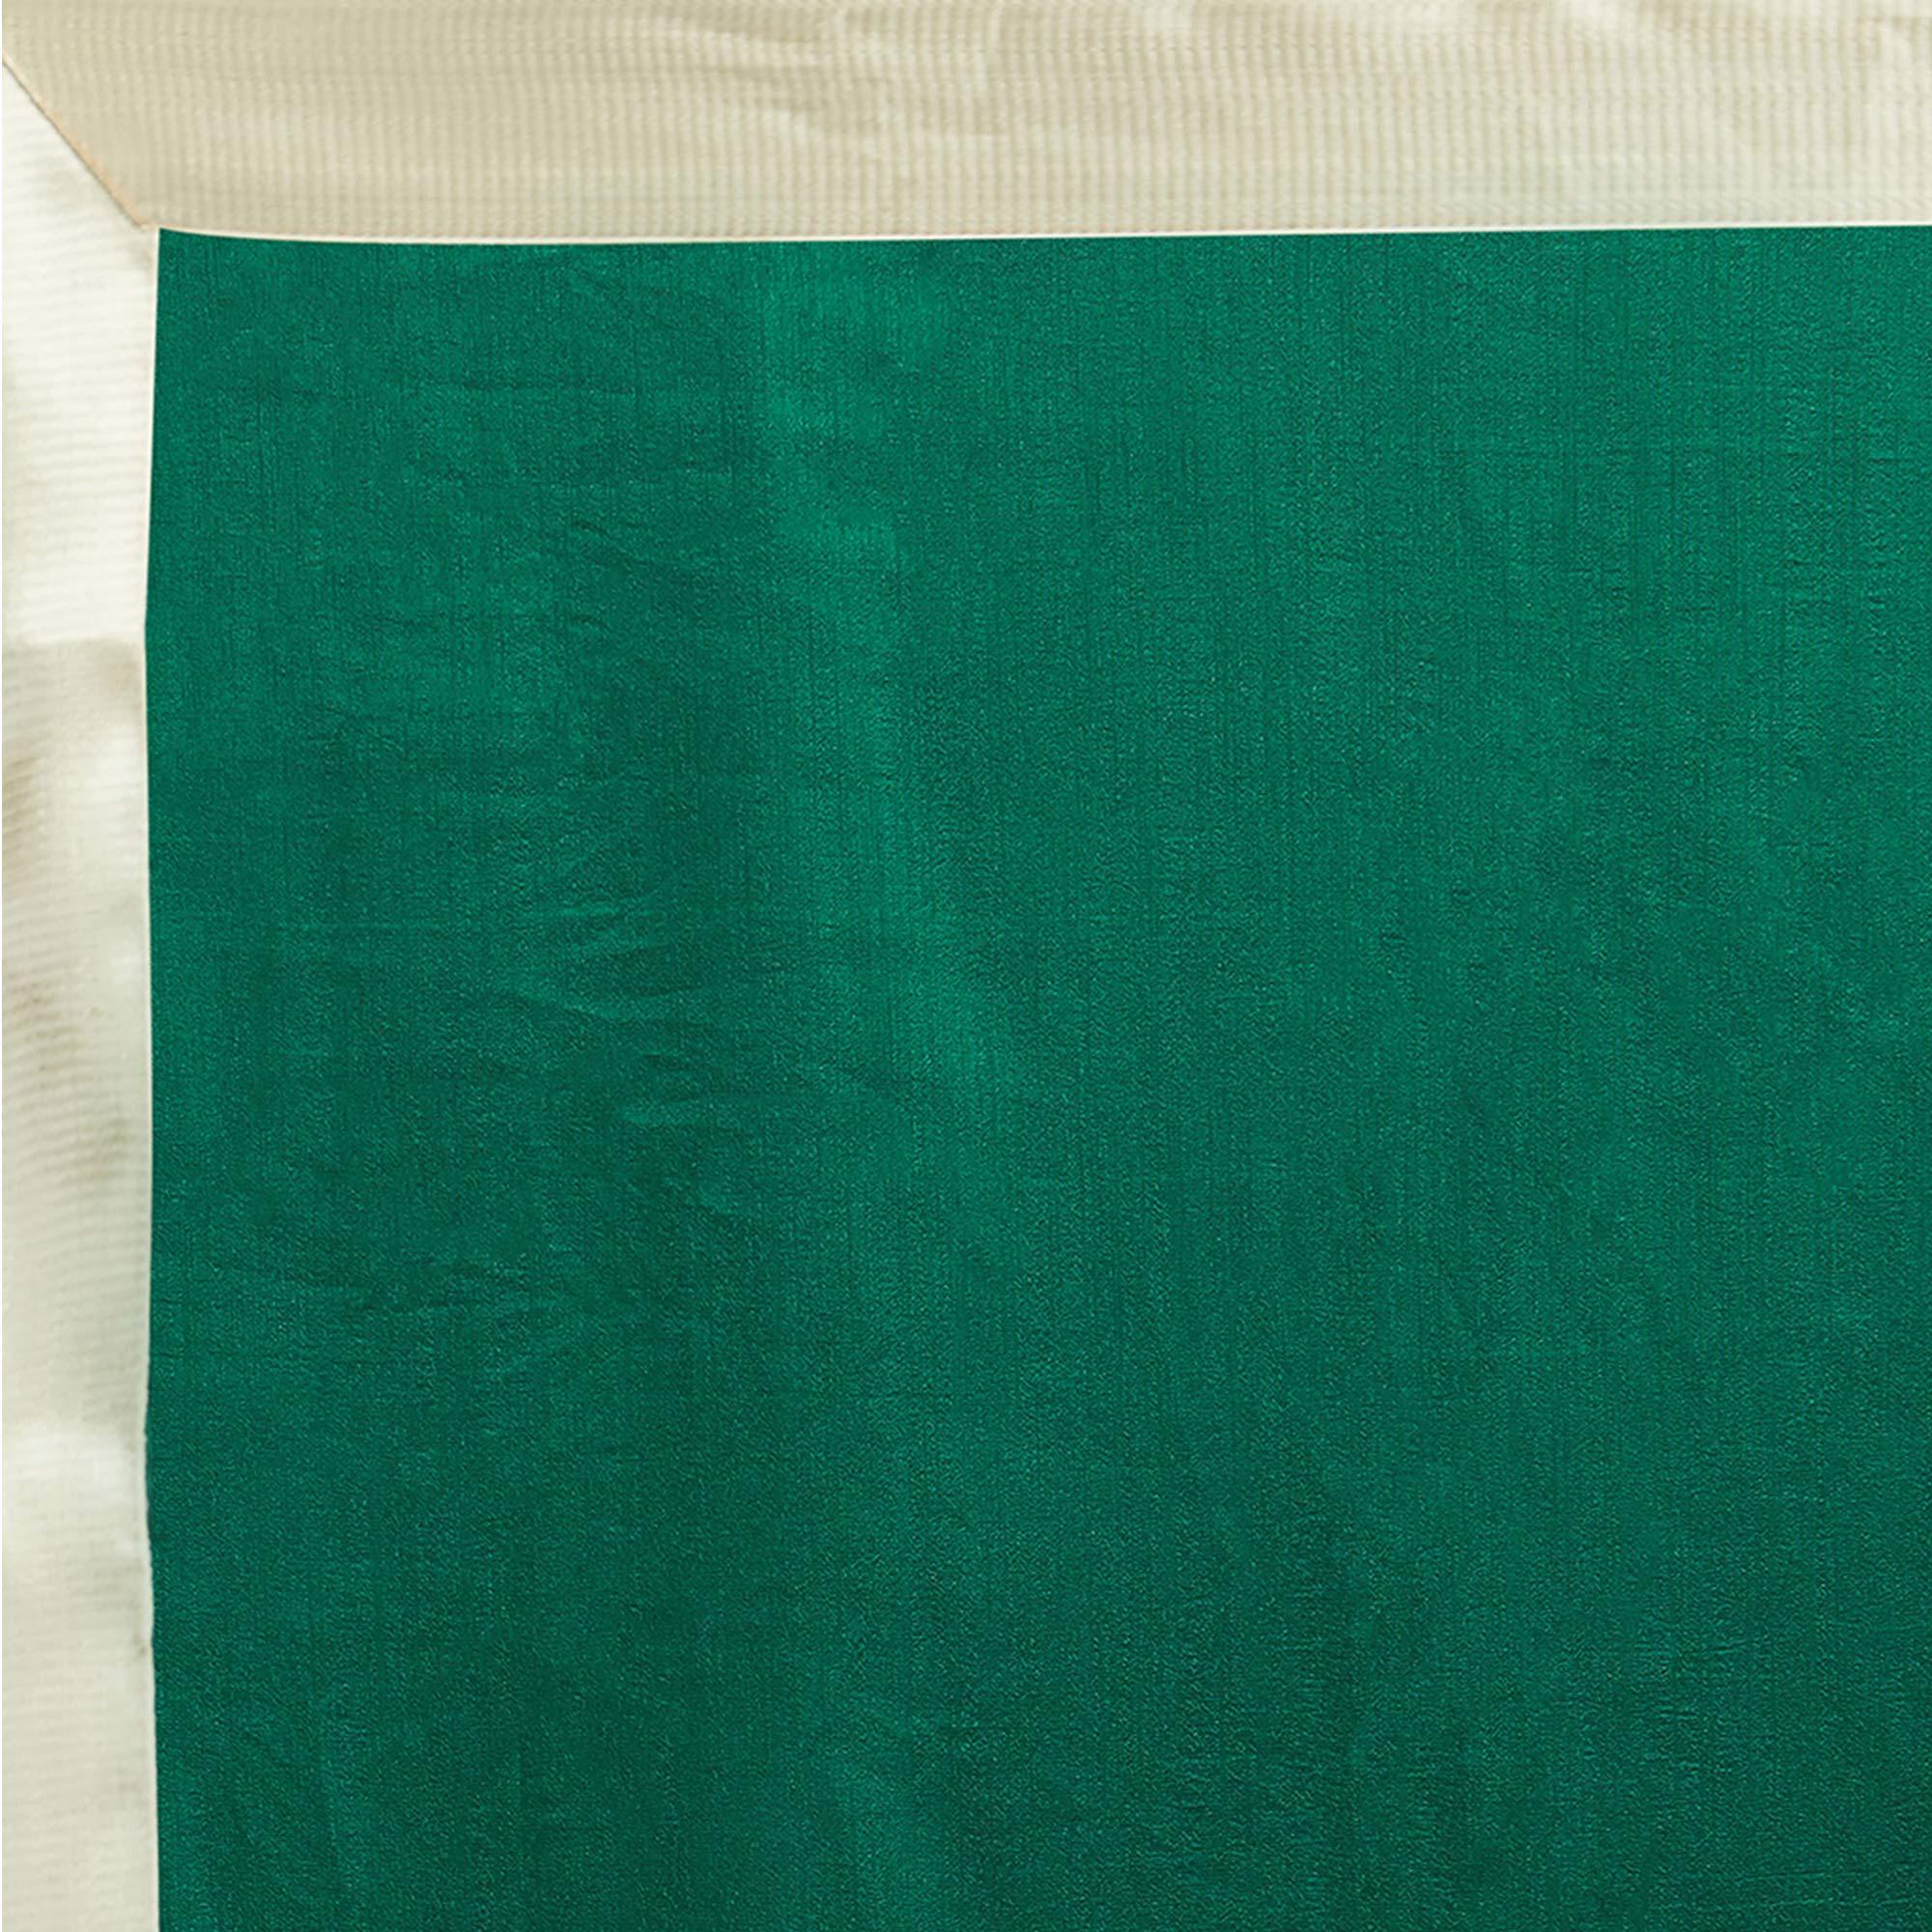 Gorgeous Green Partywear Embroidered Vichitra Art Silk Saree - Peachmode